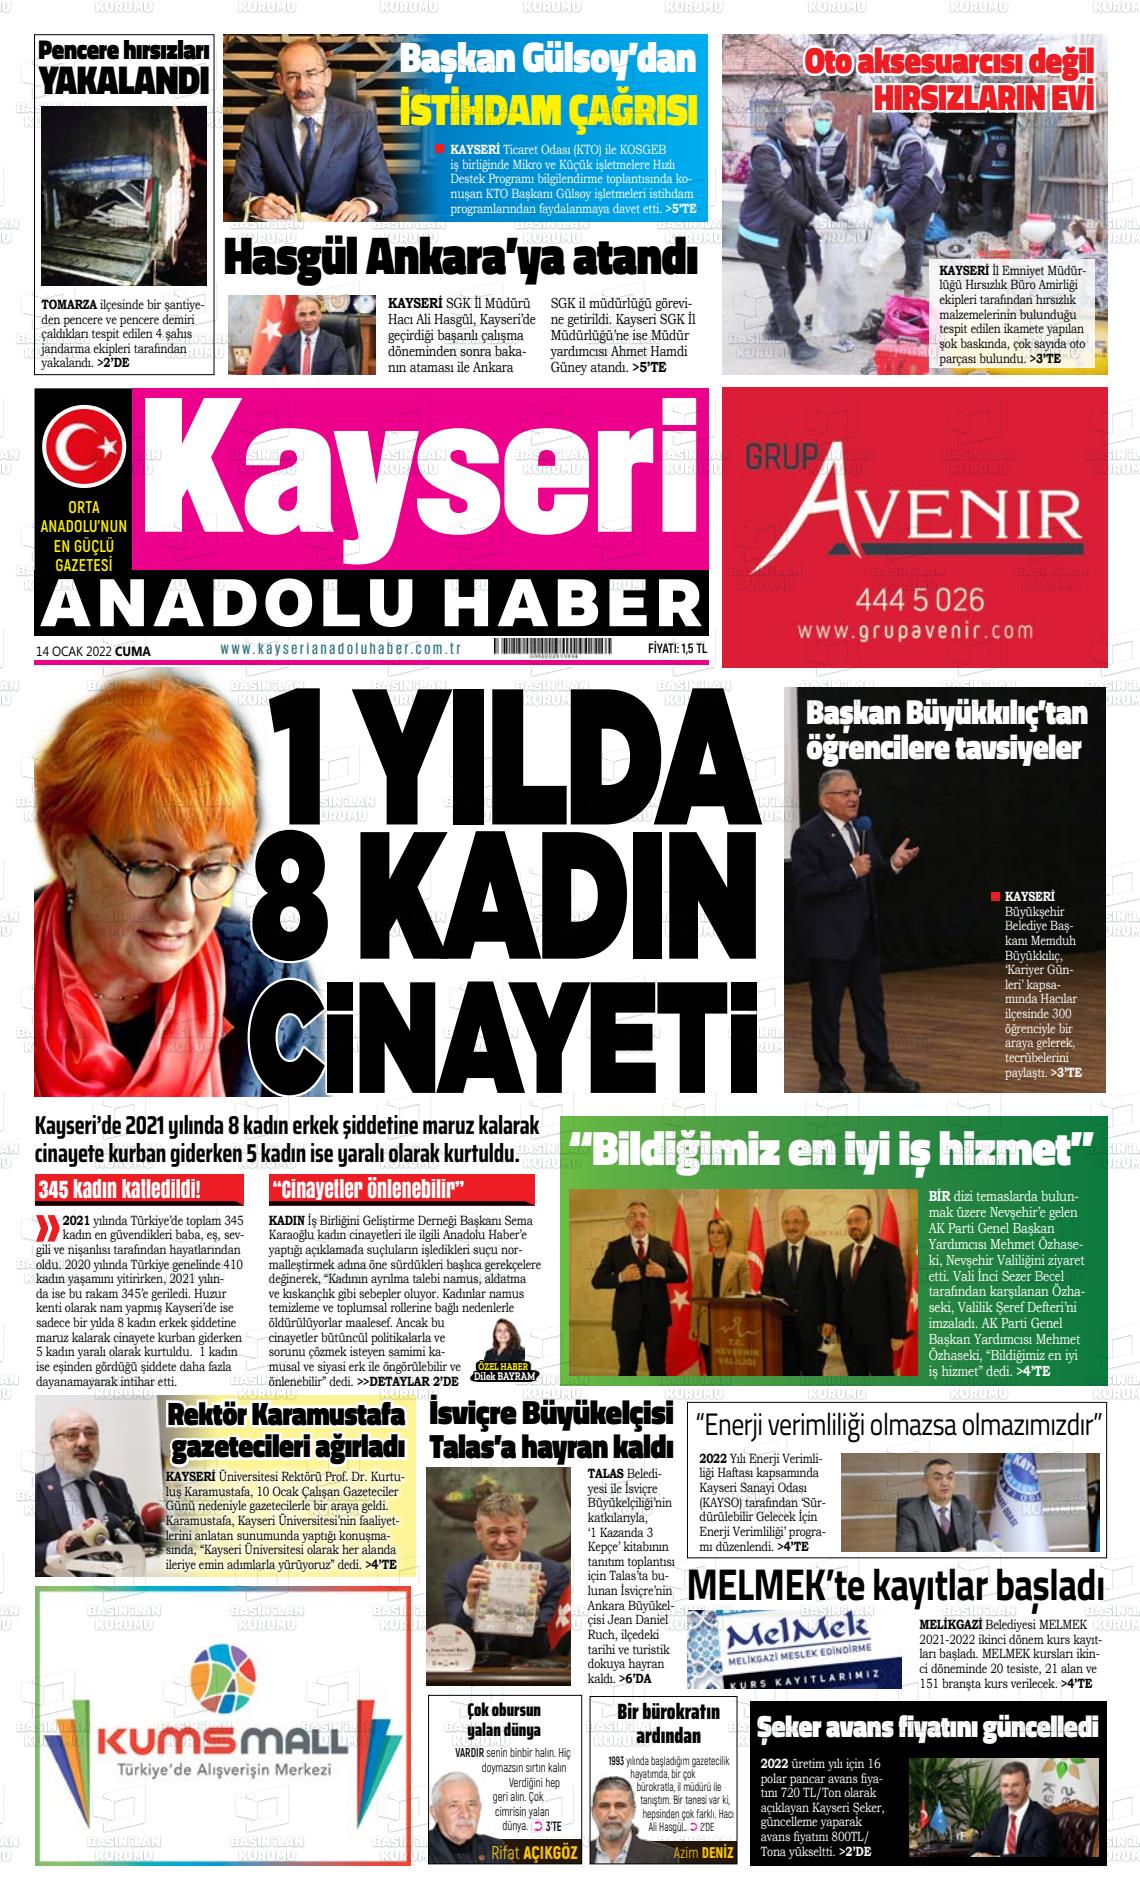 14 Ocak 2022 Kayseri Anadolu Haber Gazete Manşeti